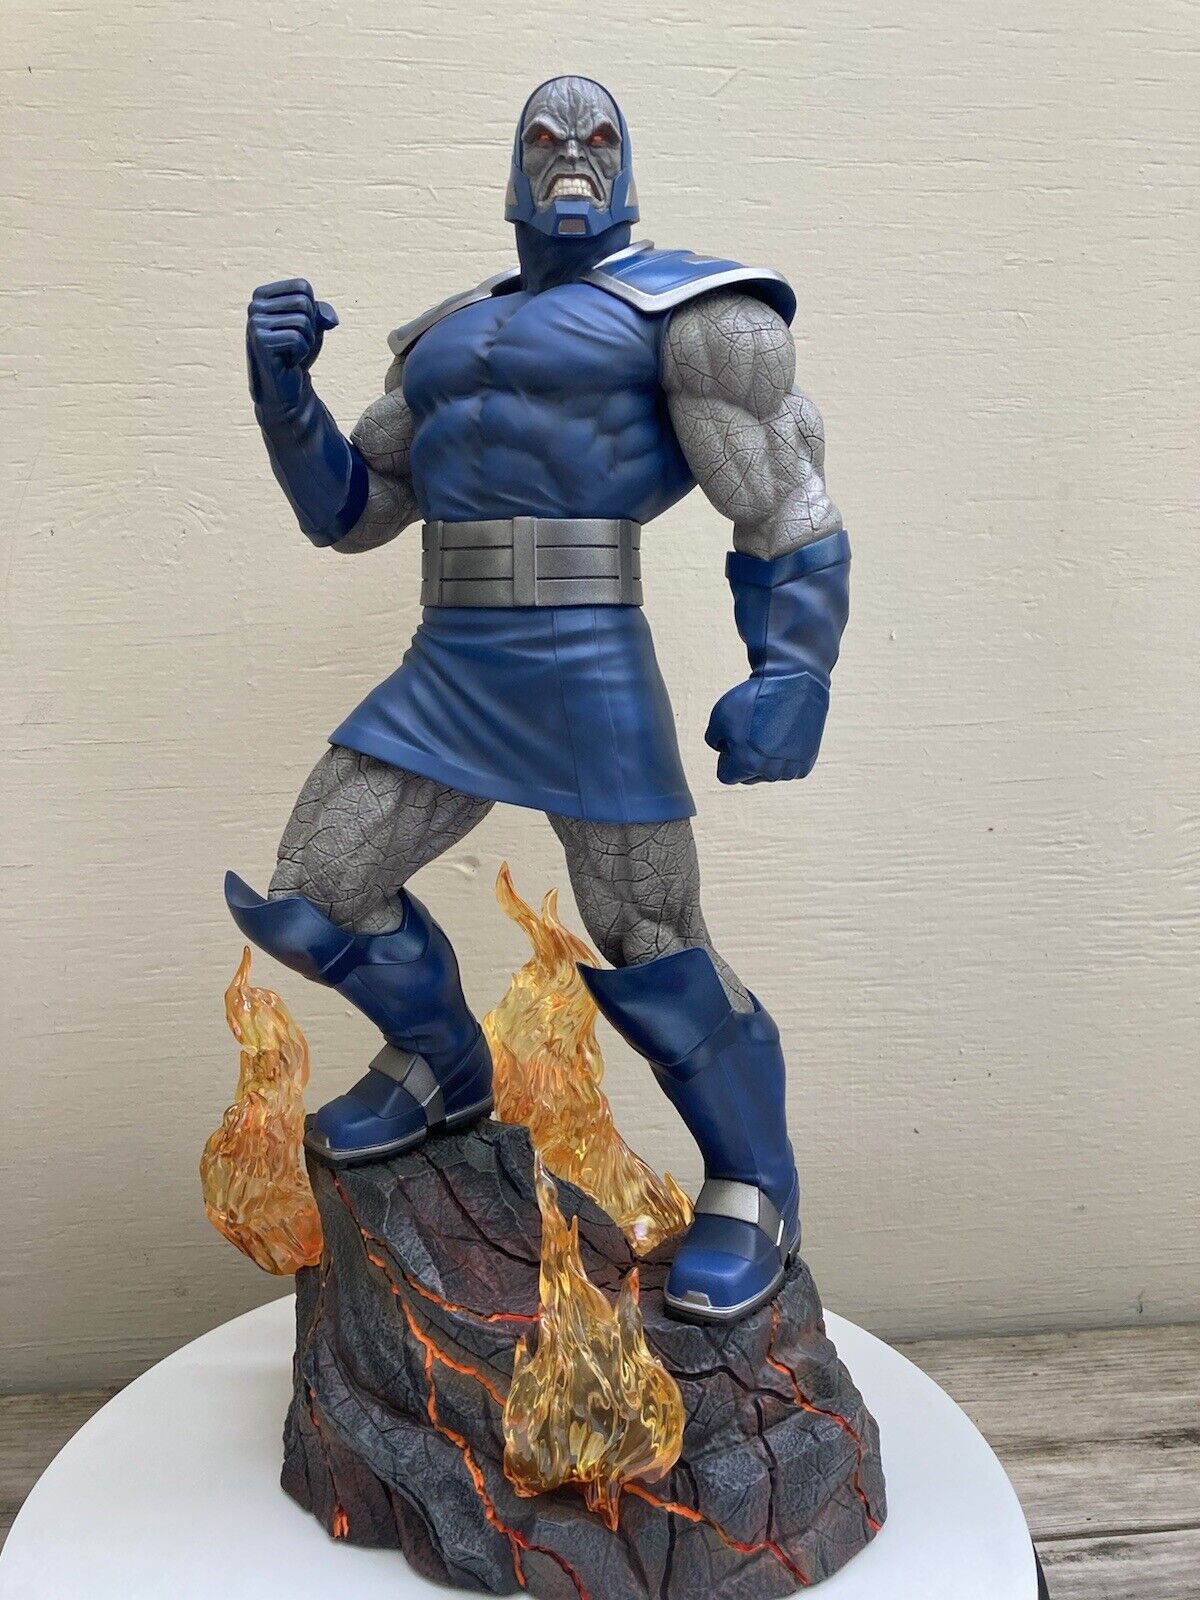 Tweeterhead Darkseid Super Powers Maquette